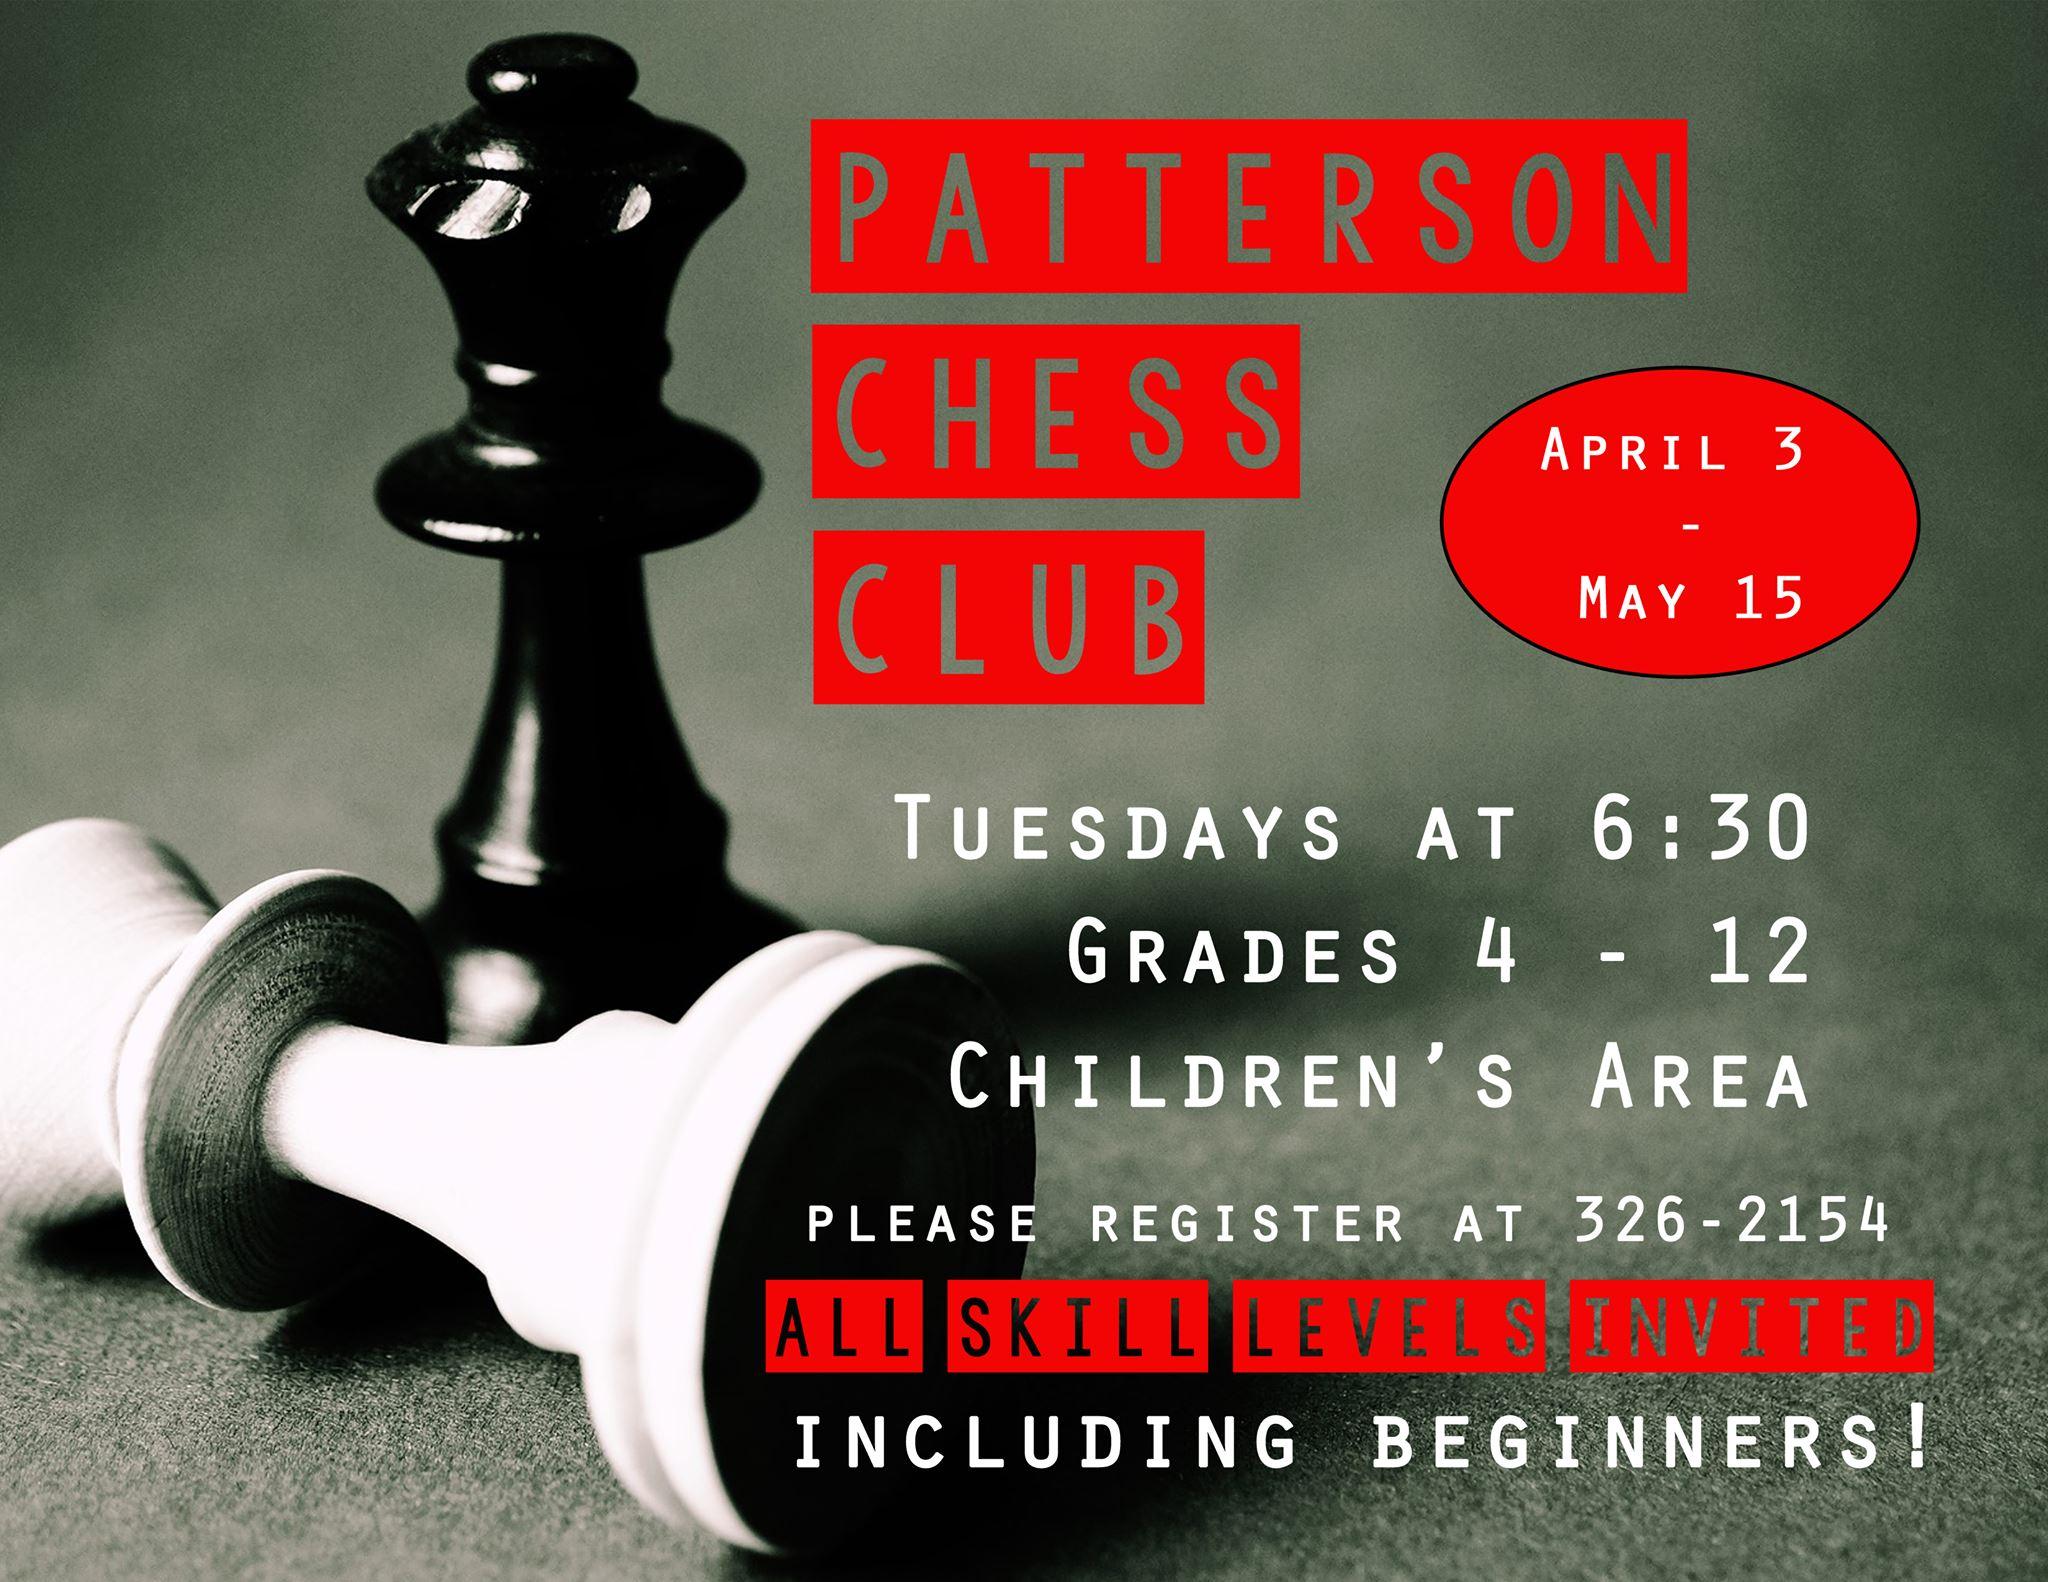 Patterson Junior Chess Club